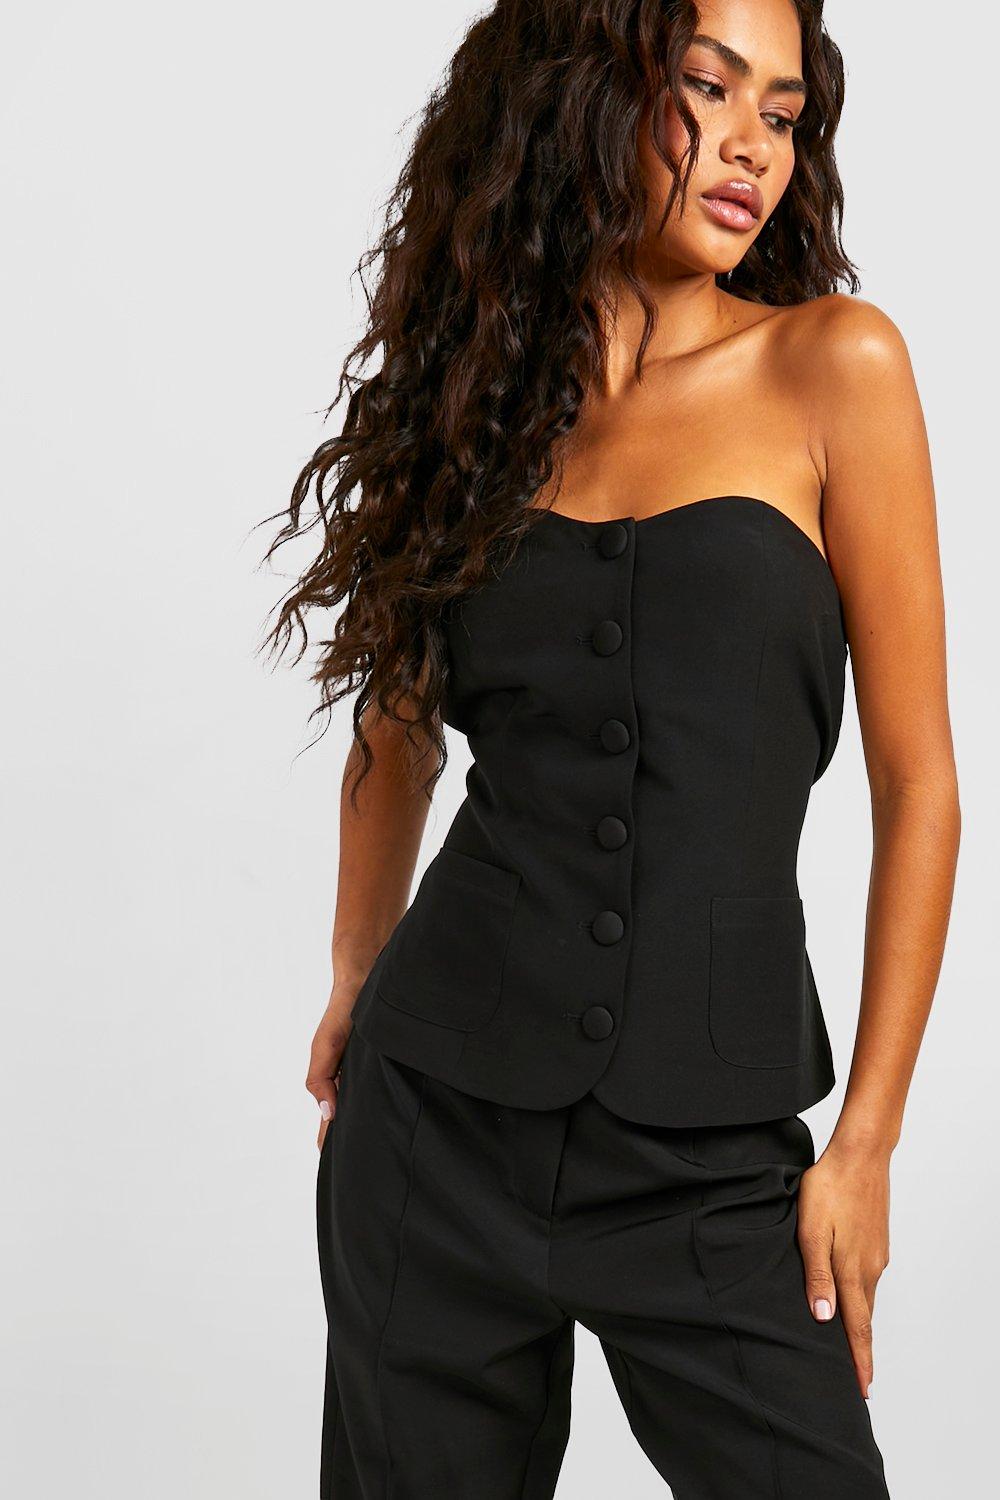 ASOS DESIGN lace up corset top in black